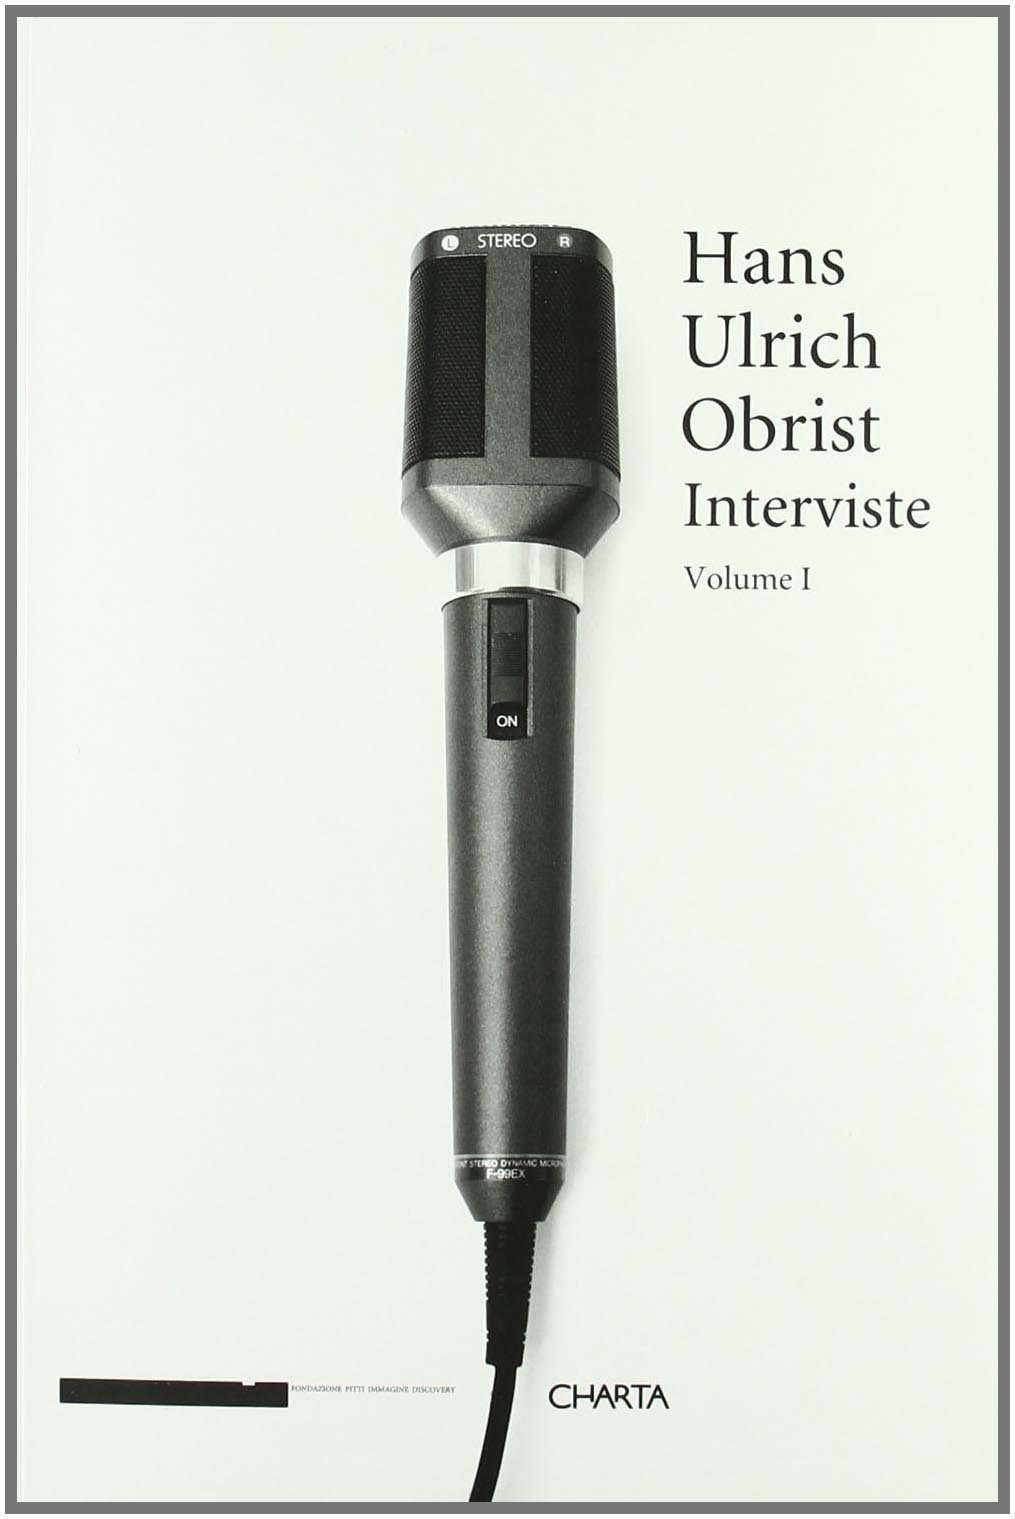 Hans Ulrich Obrist – Interviste. Volume I (Charta, Milano 2003)